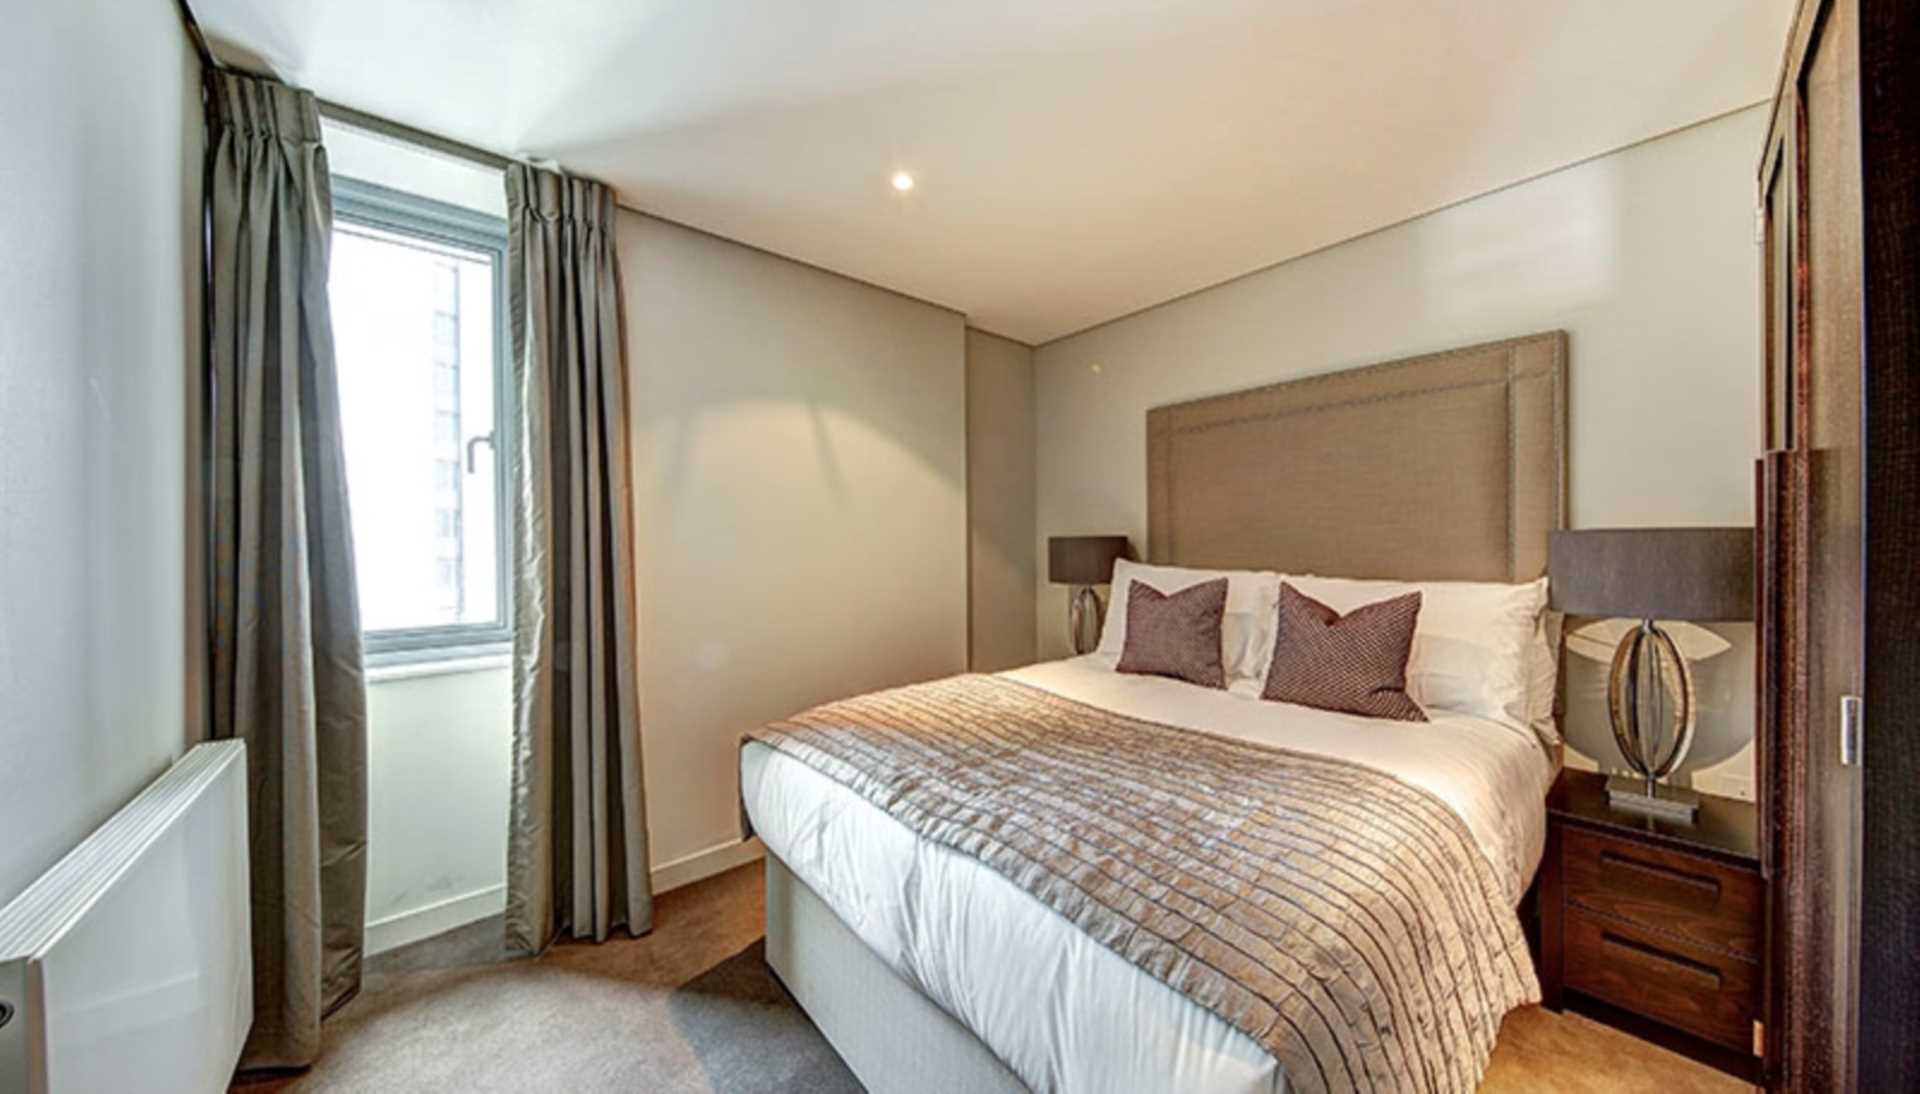 London W2 1AN 3 bed flat rental property internal/external image-3